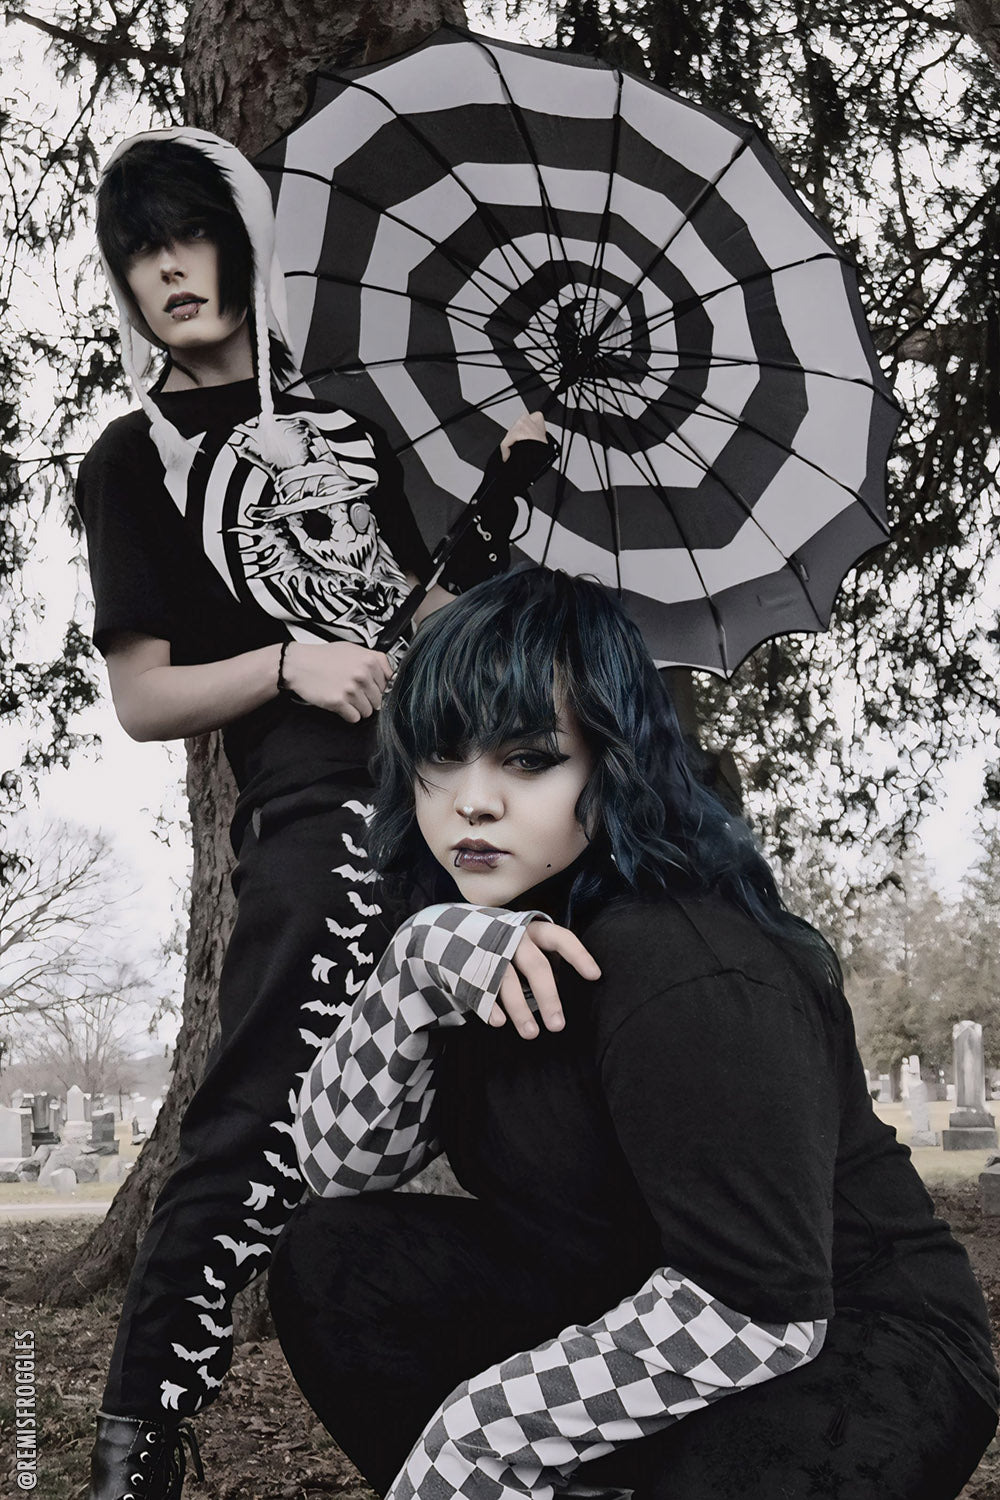 gothic black and white spiral umbrella